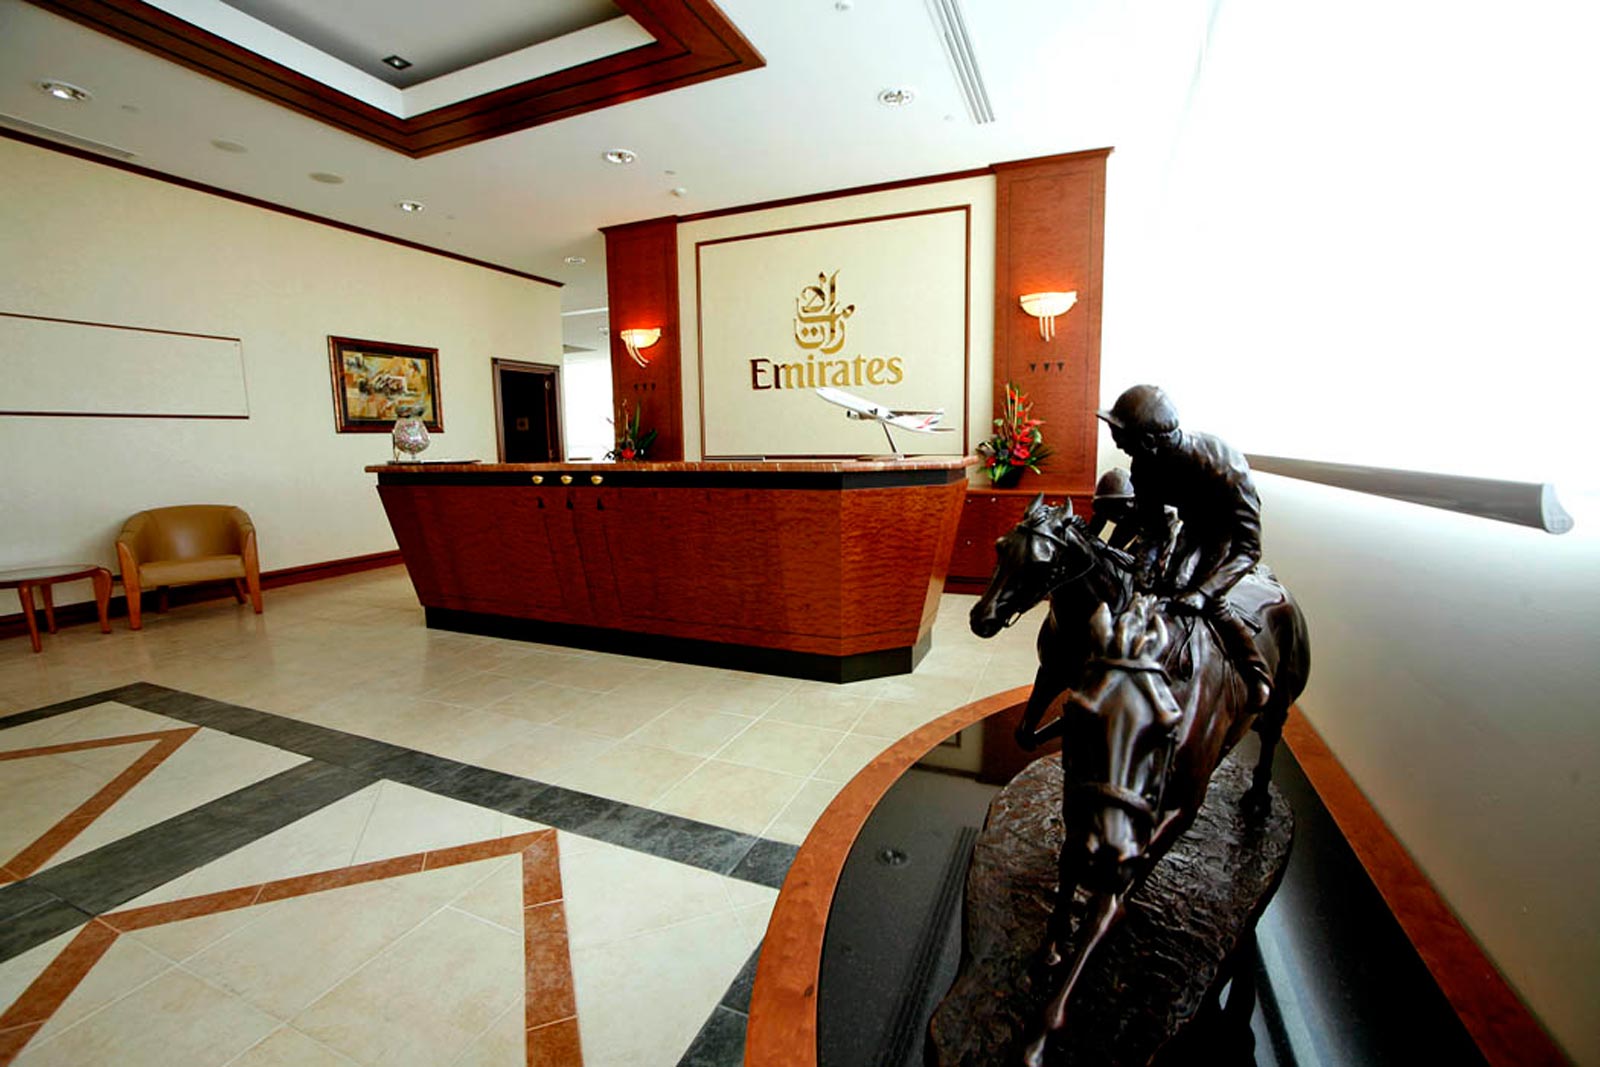 Emirates Lounge entry at Brisbane Airport